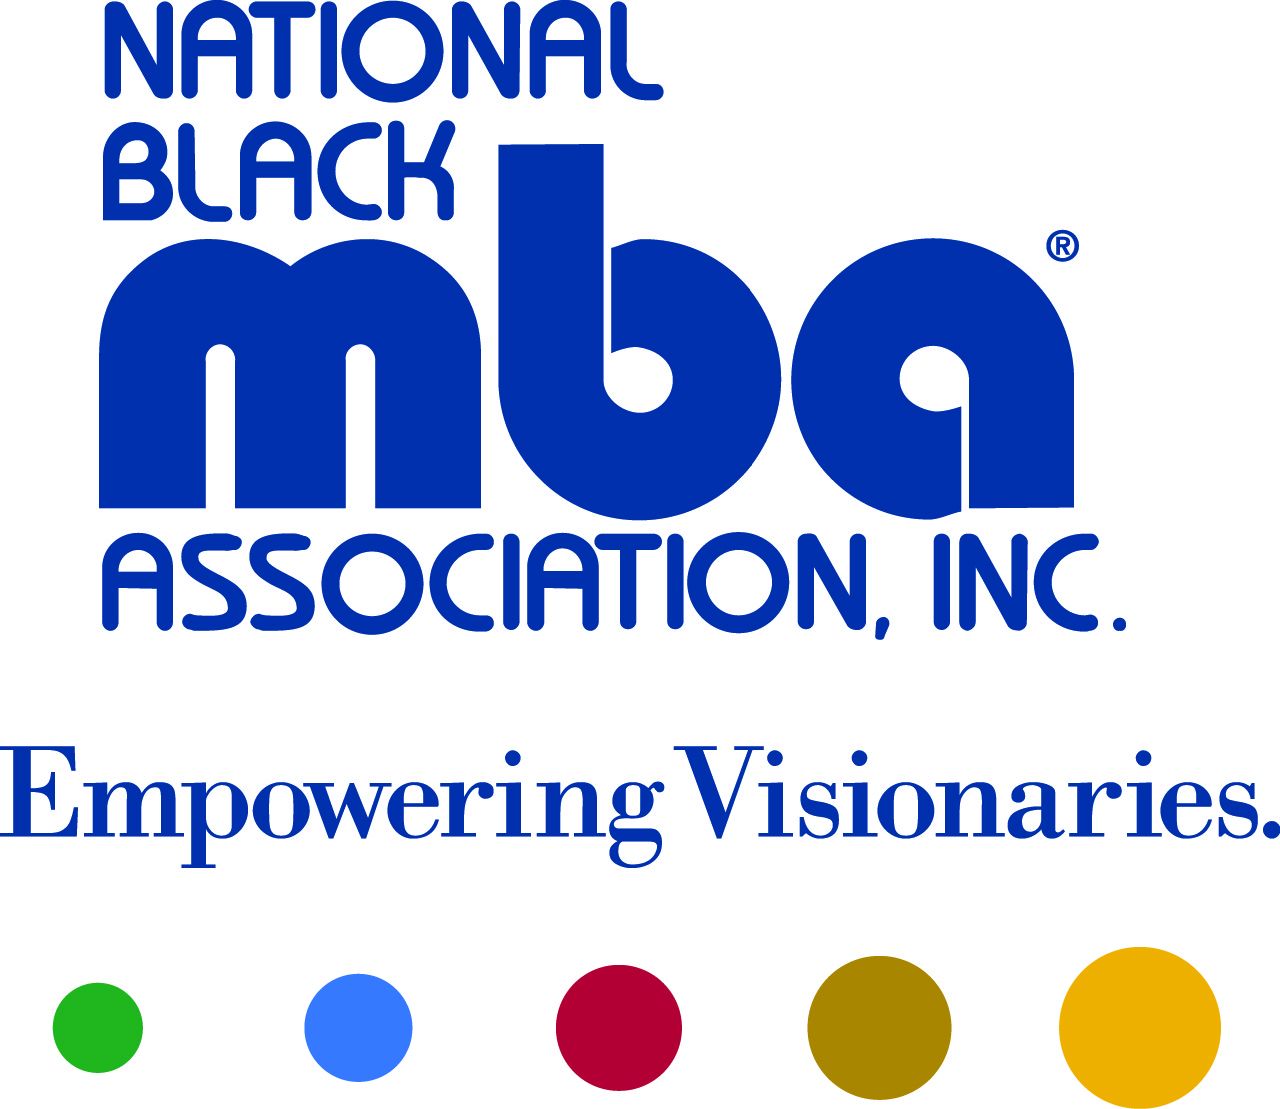 National Black MBA Conference comes to Atlanta